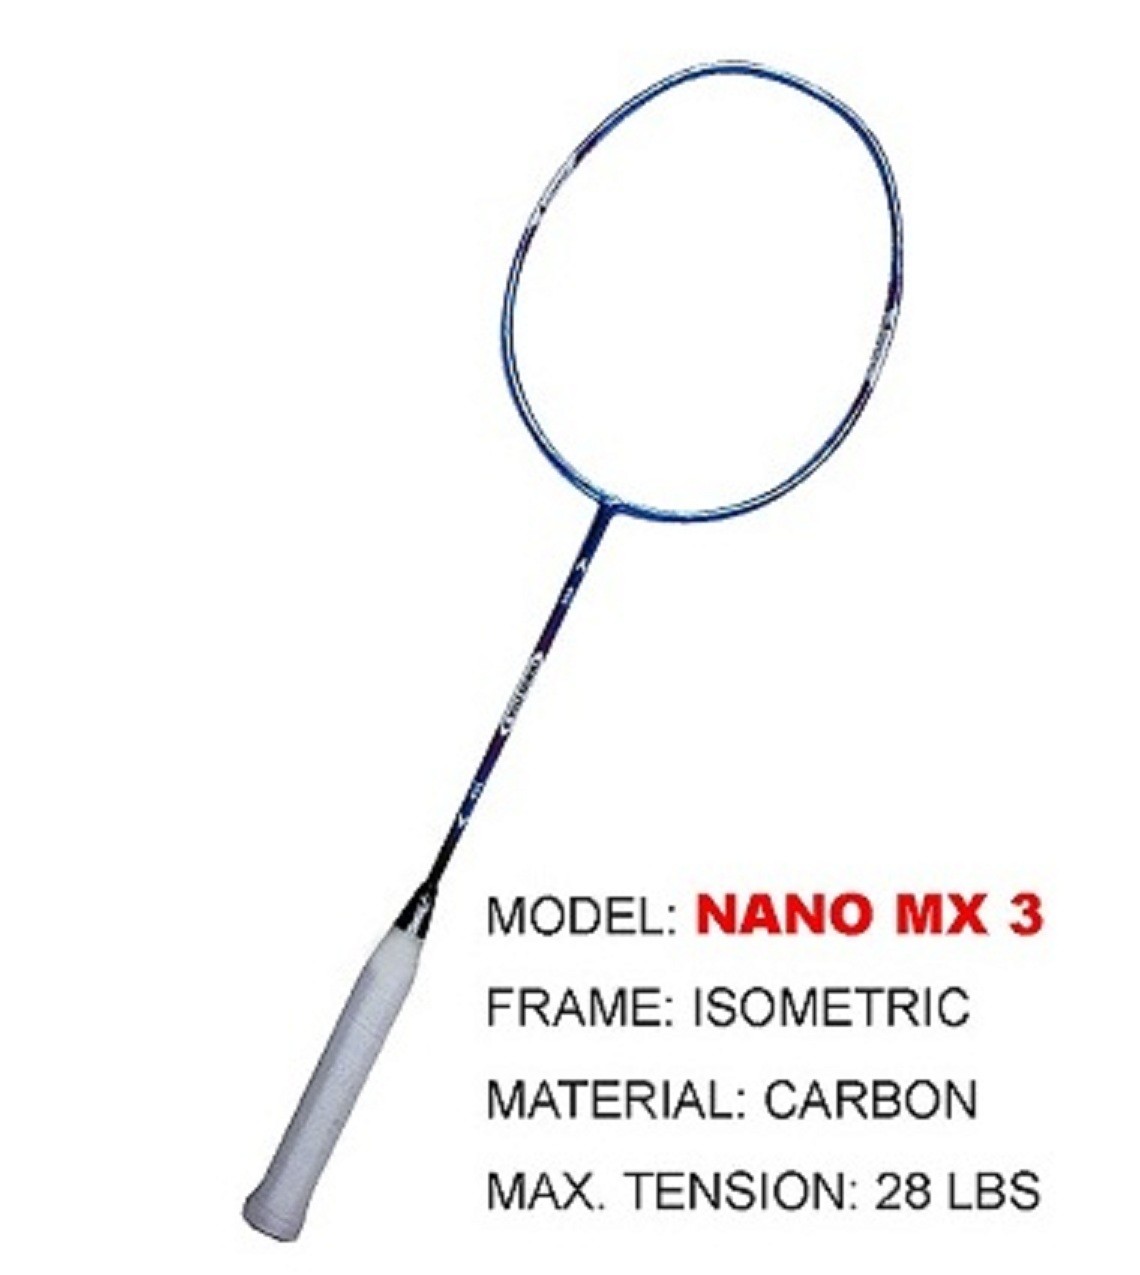 Ambros Badminton Racket Nano MX 3